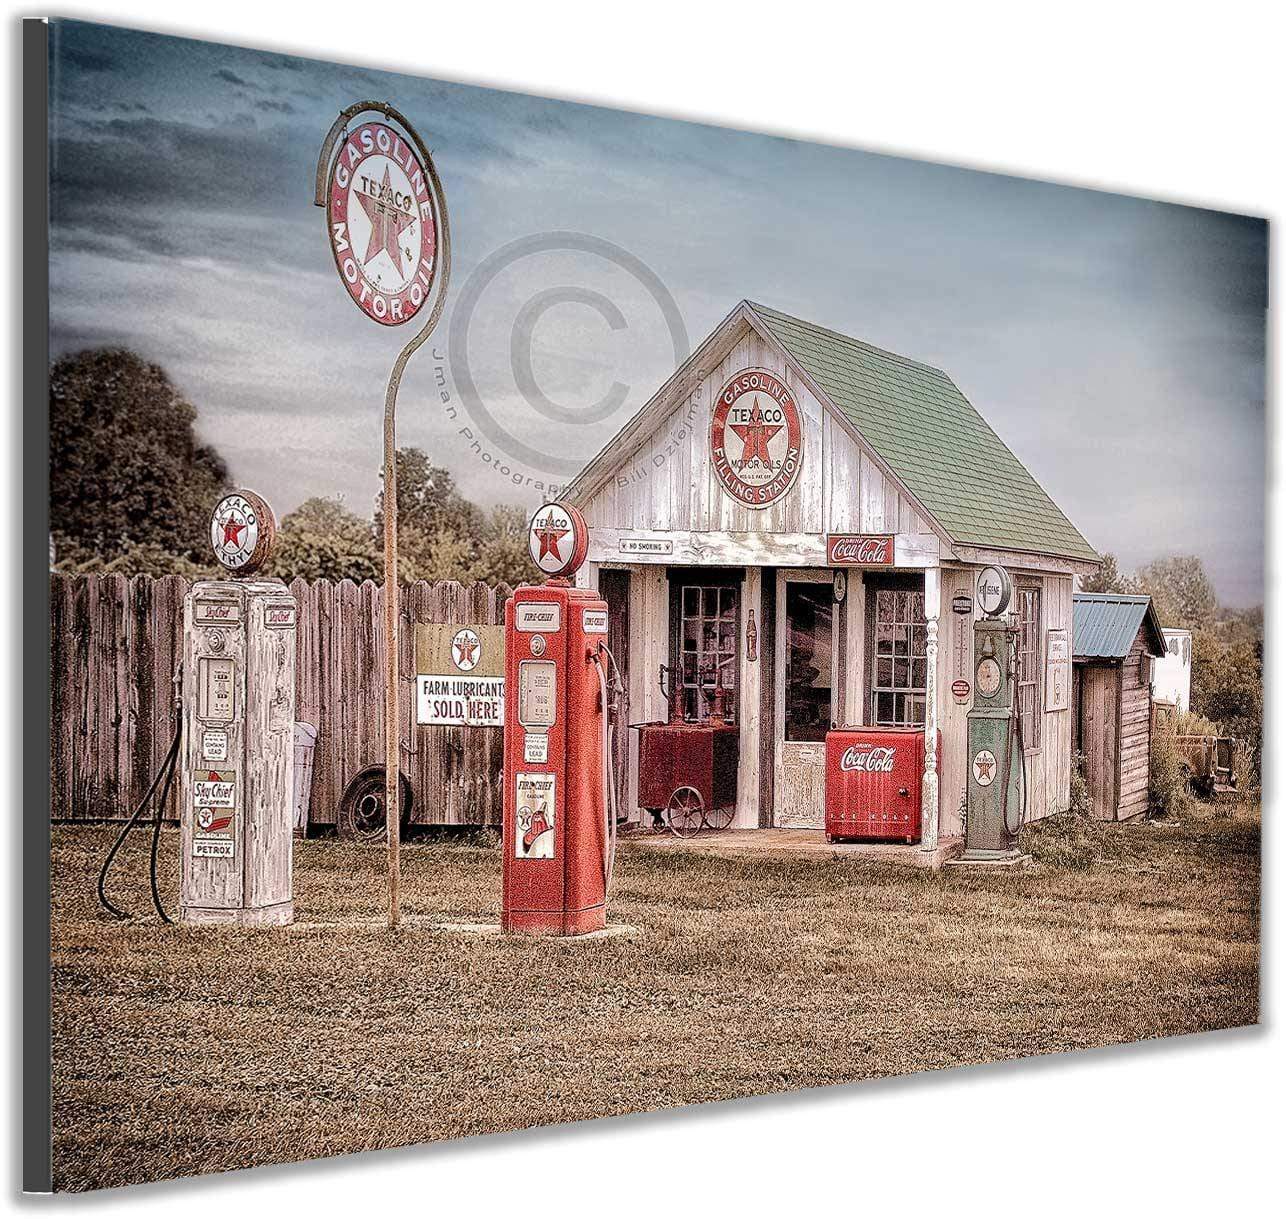 Texaco #1 Vintage gas station and pumps Automotive jmanphoto